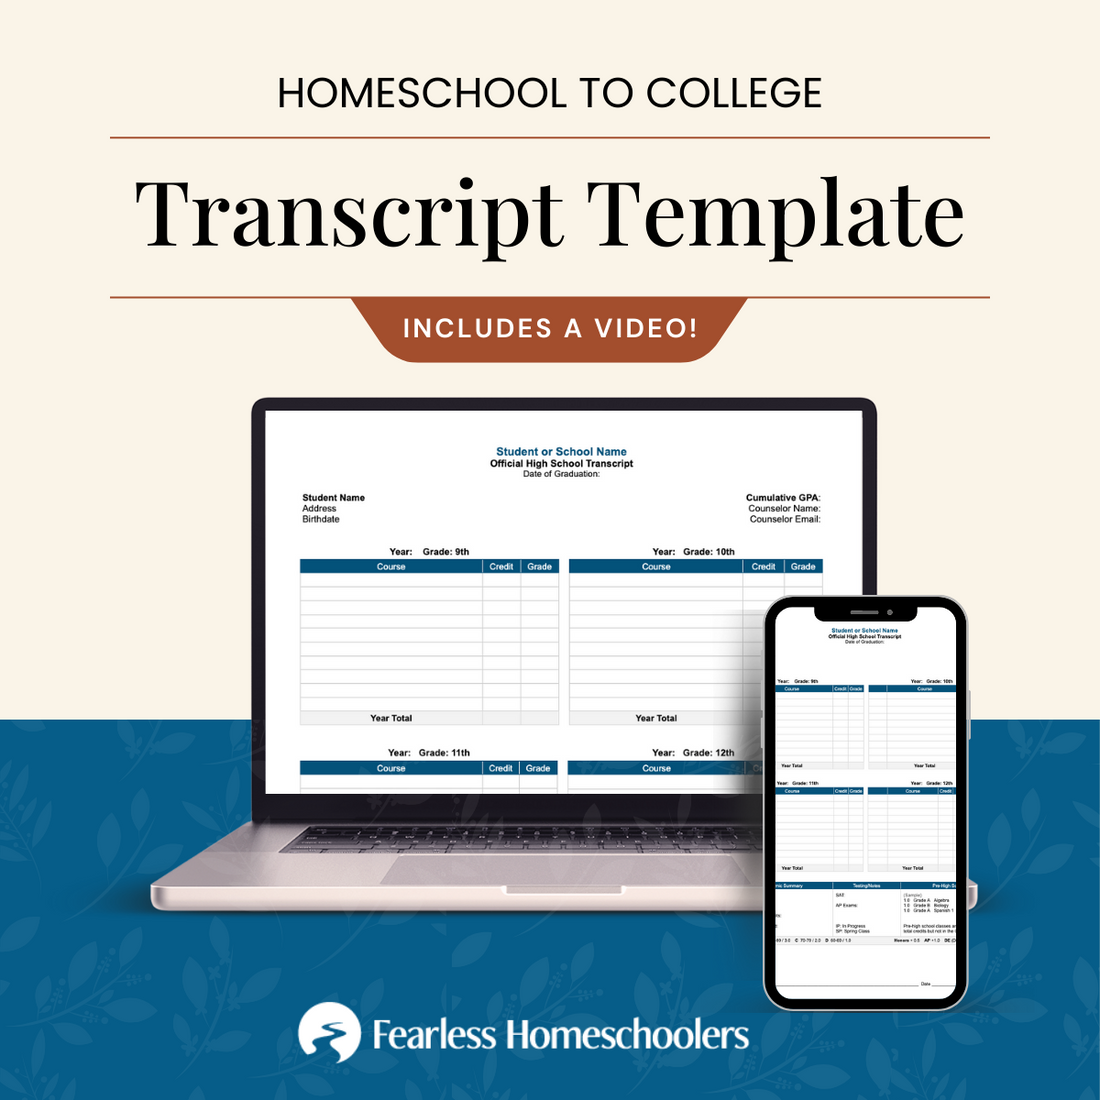 Homeschool to College: Transcript Template